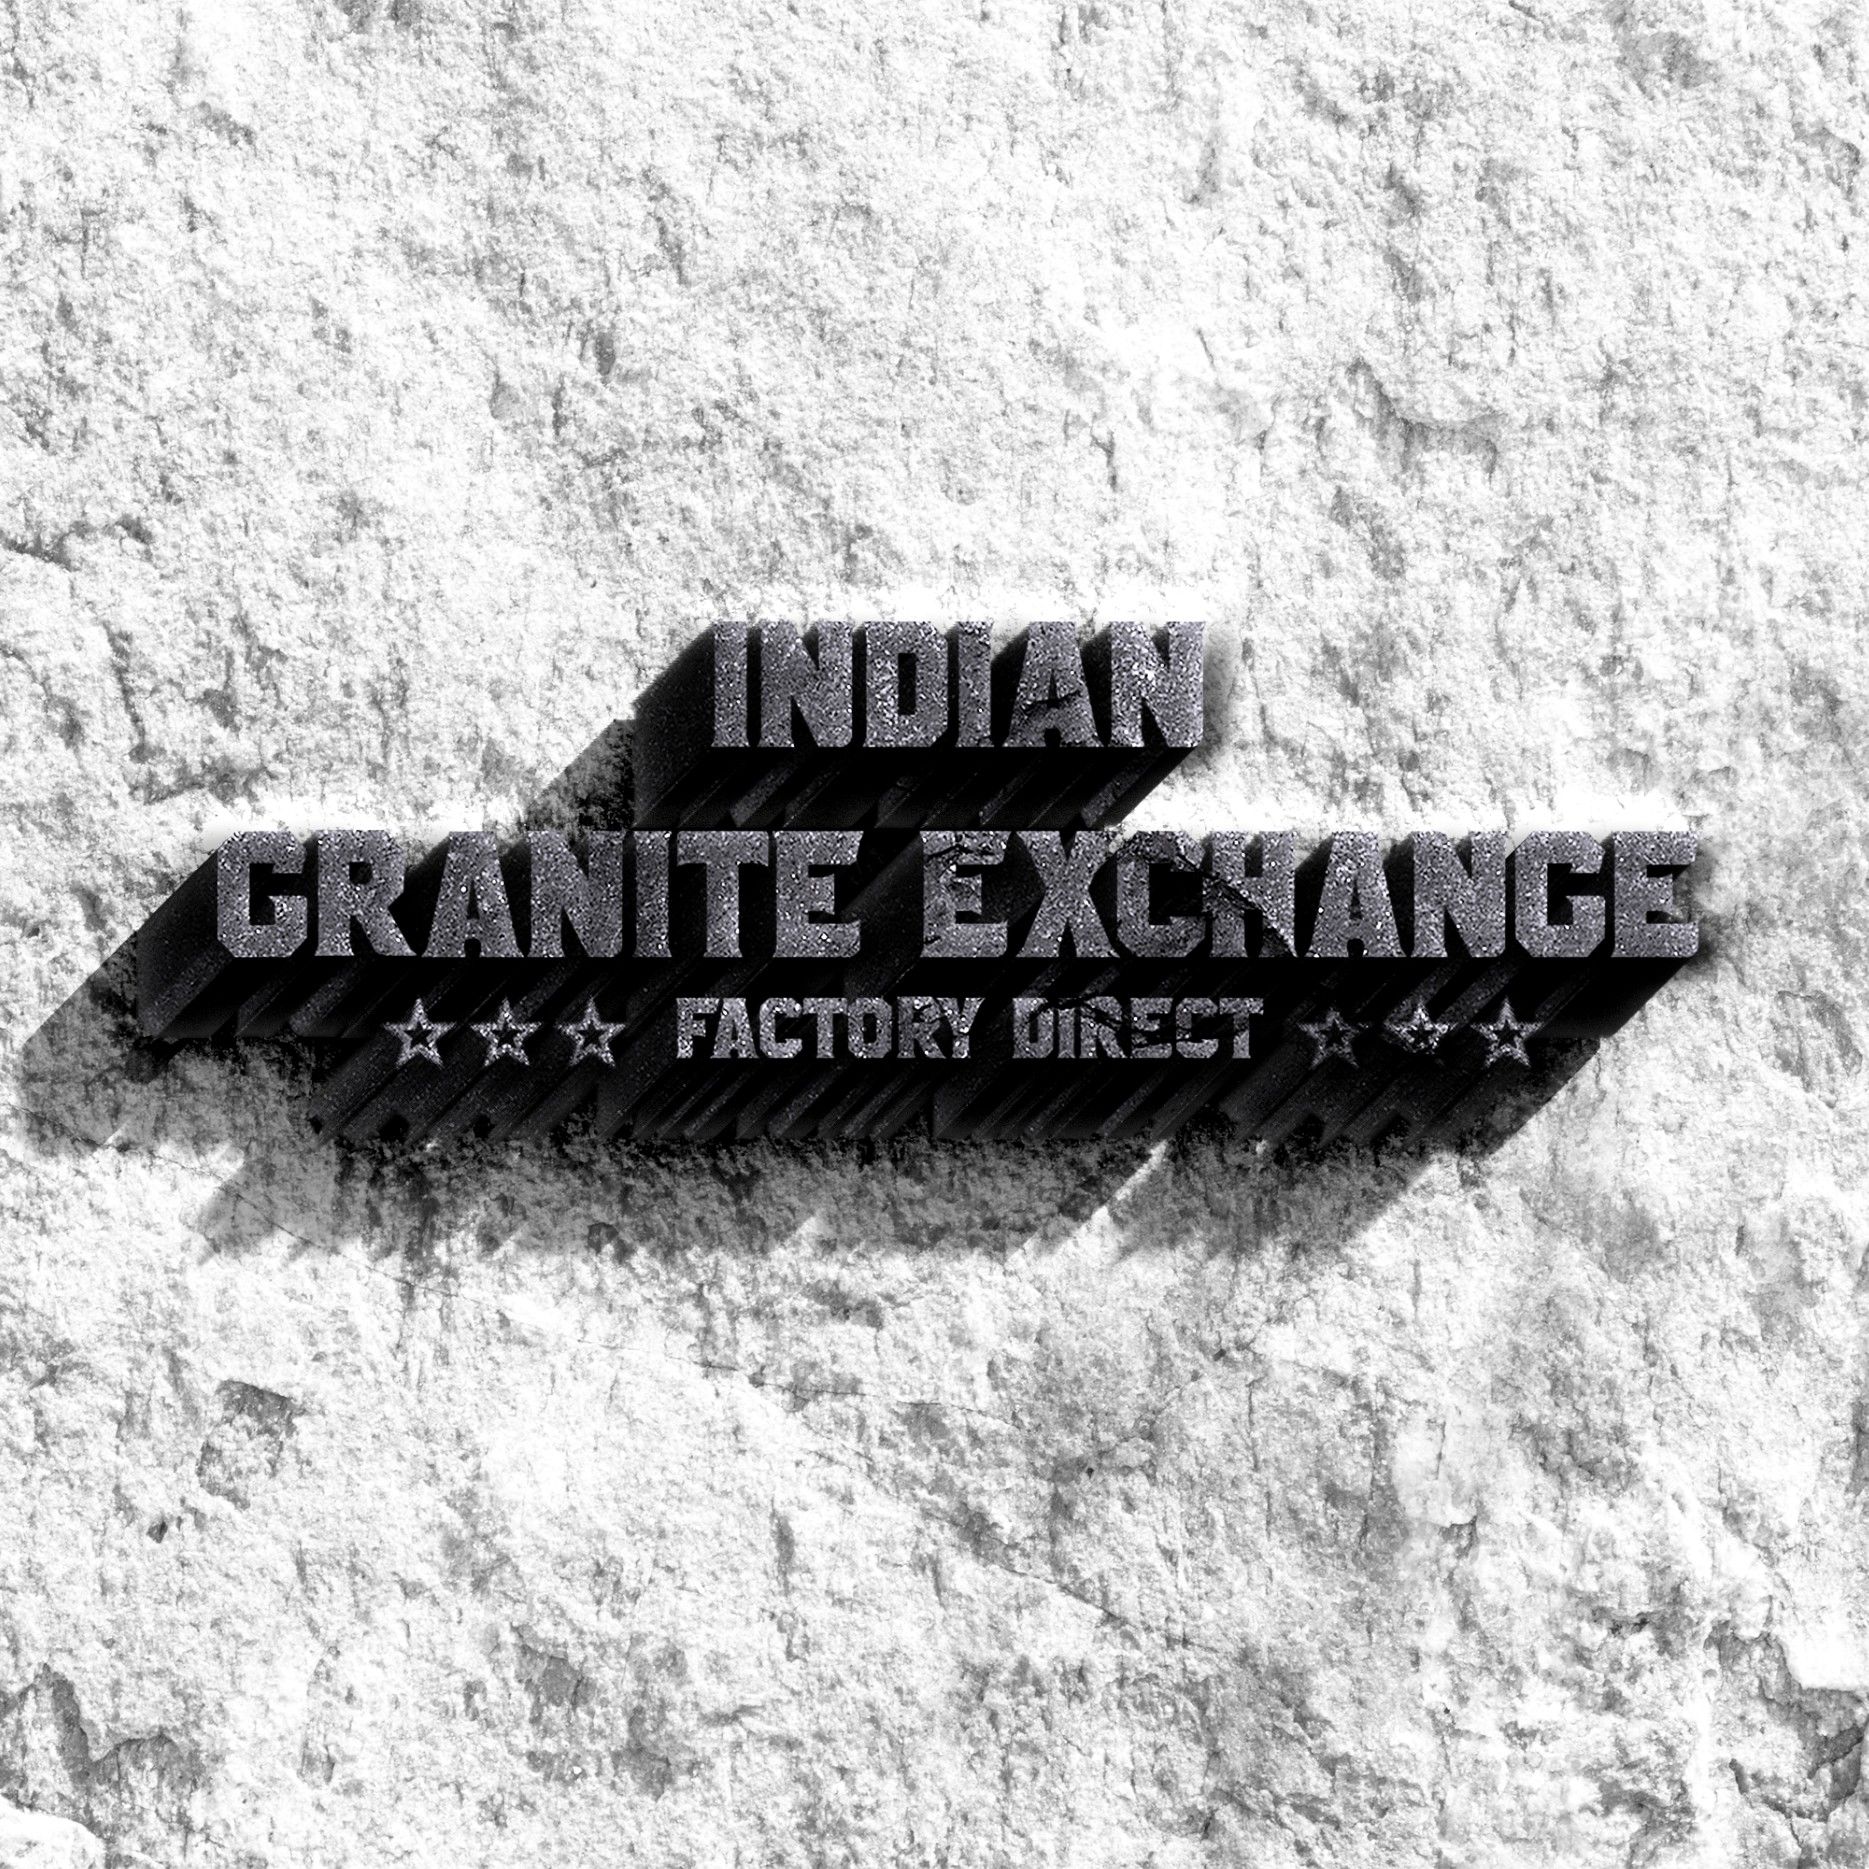 INDIAN GRANITE EXCHANGE